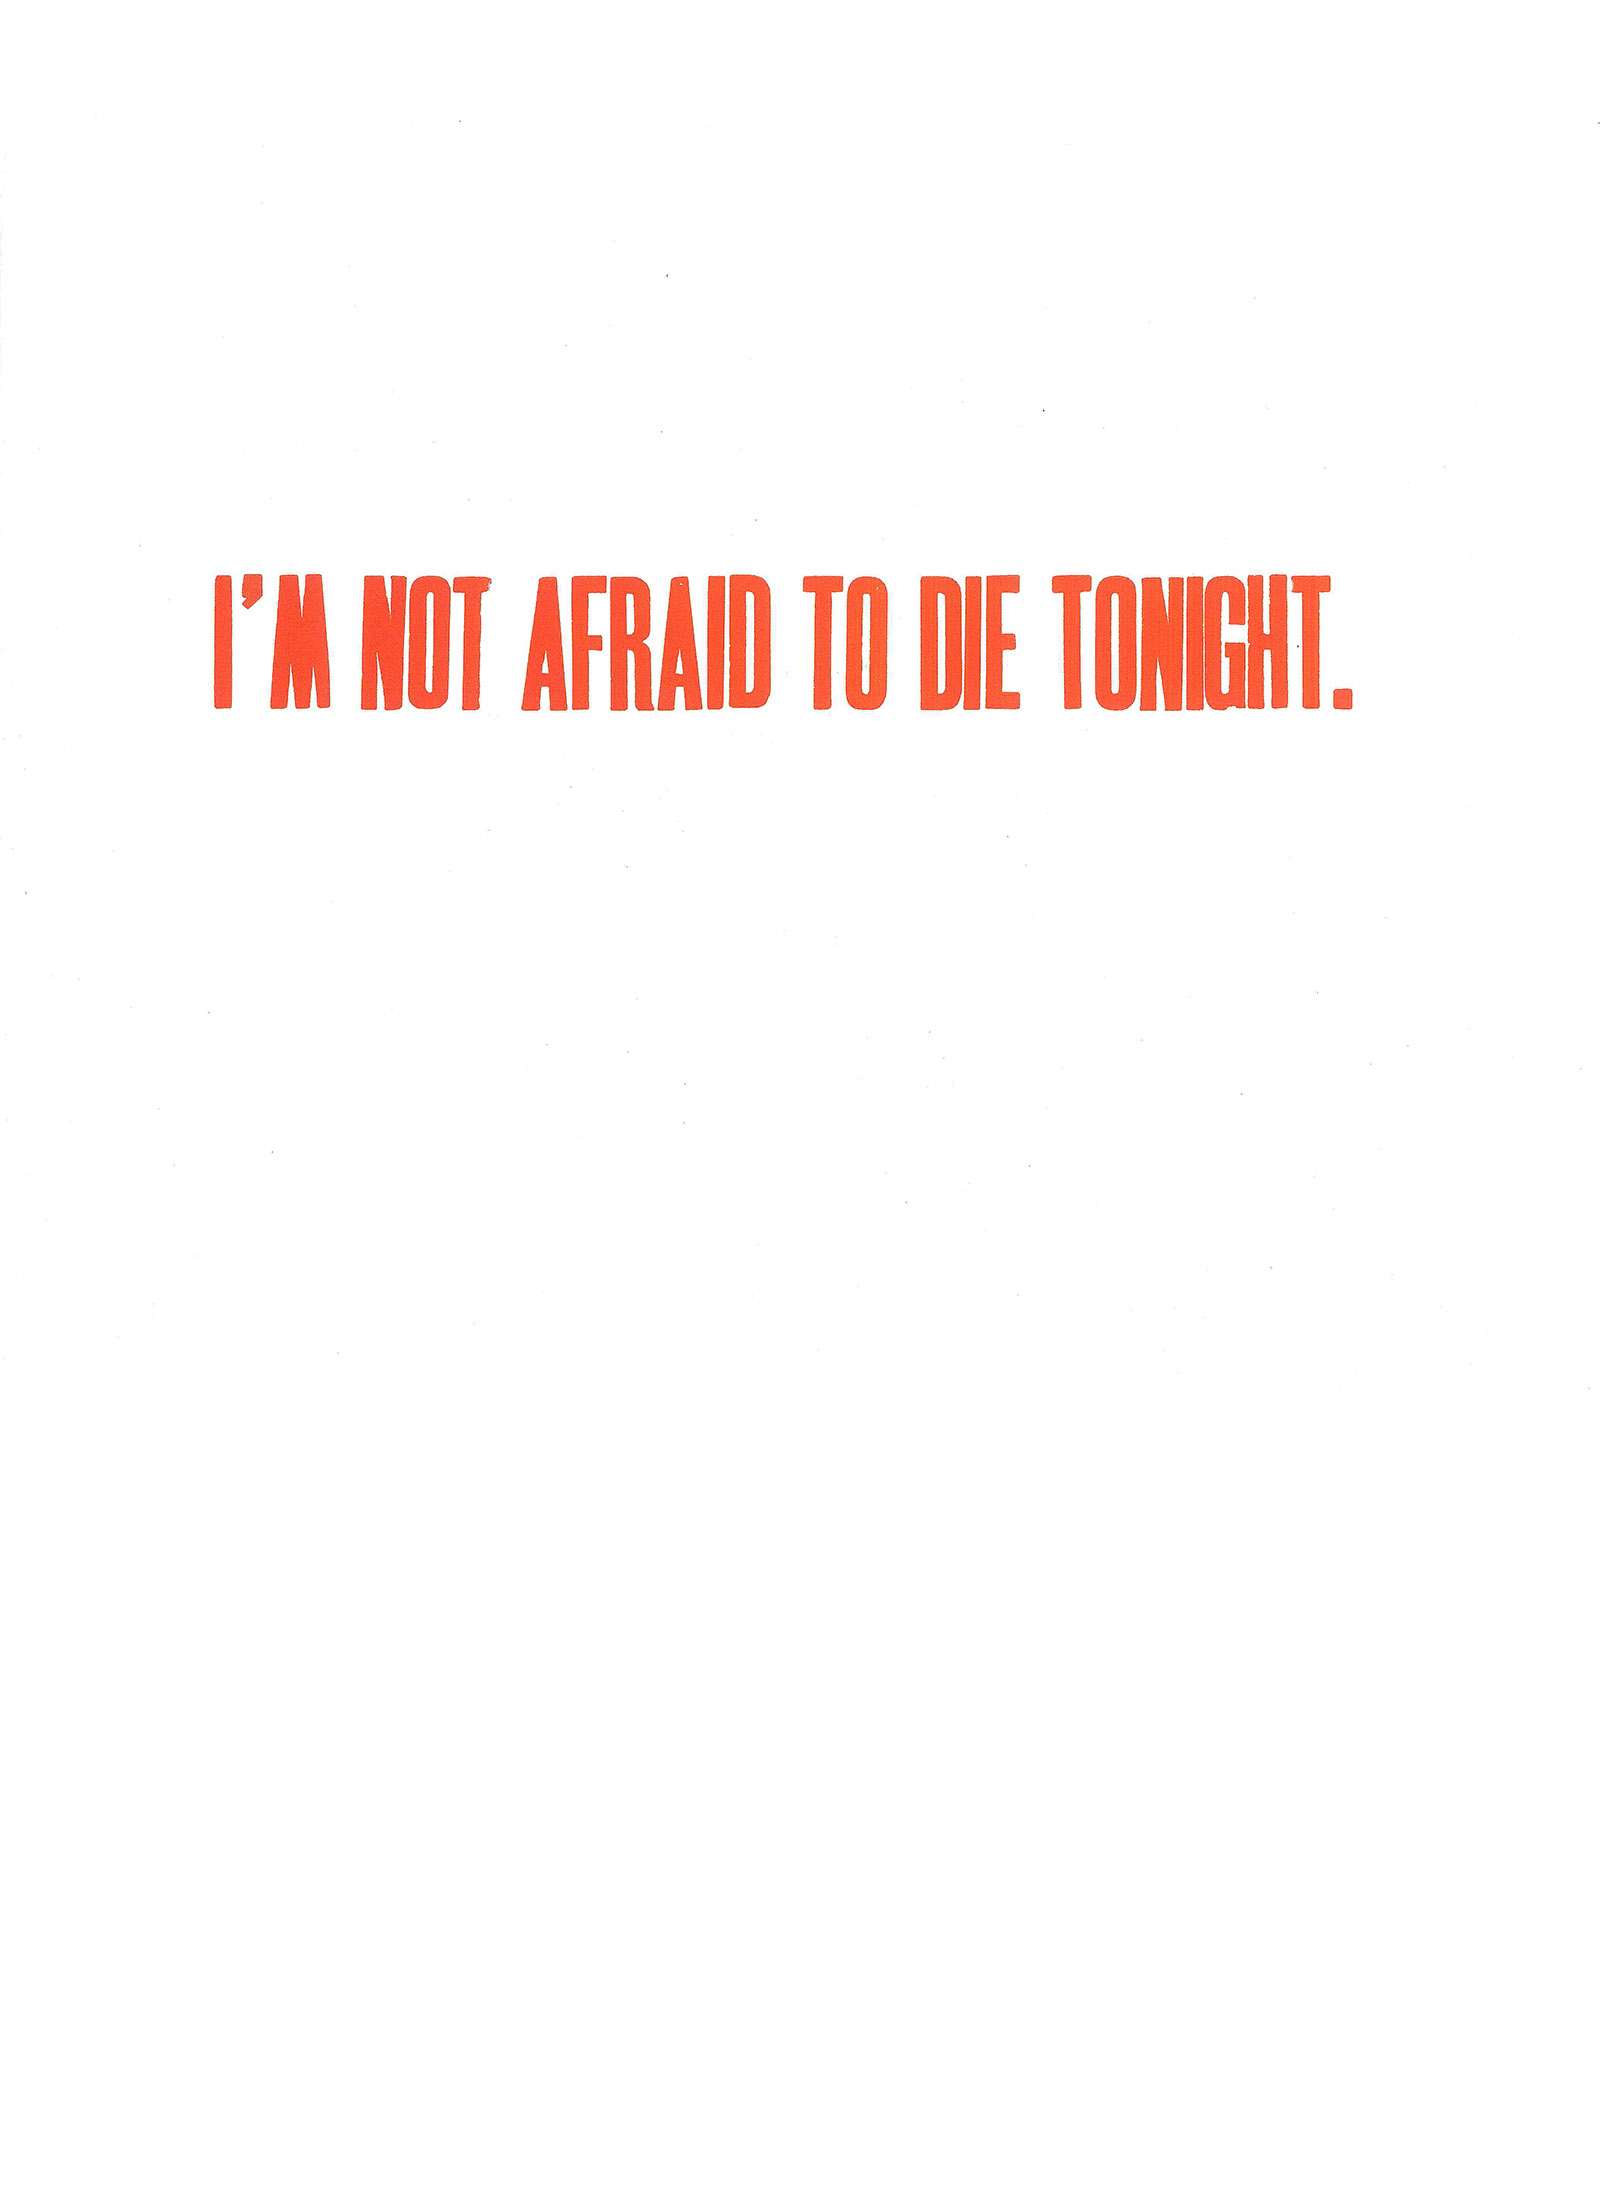 I'm not afraid to die tonight.